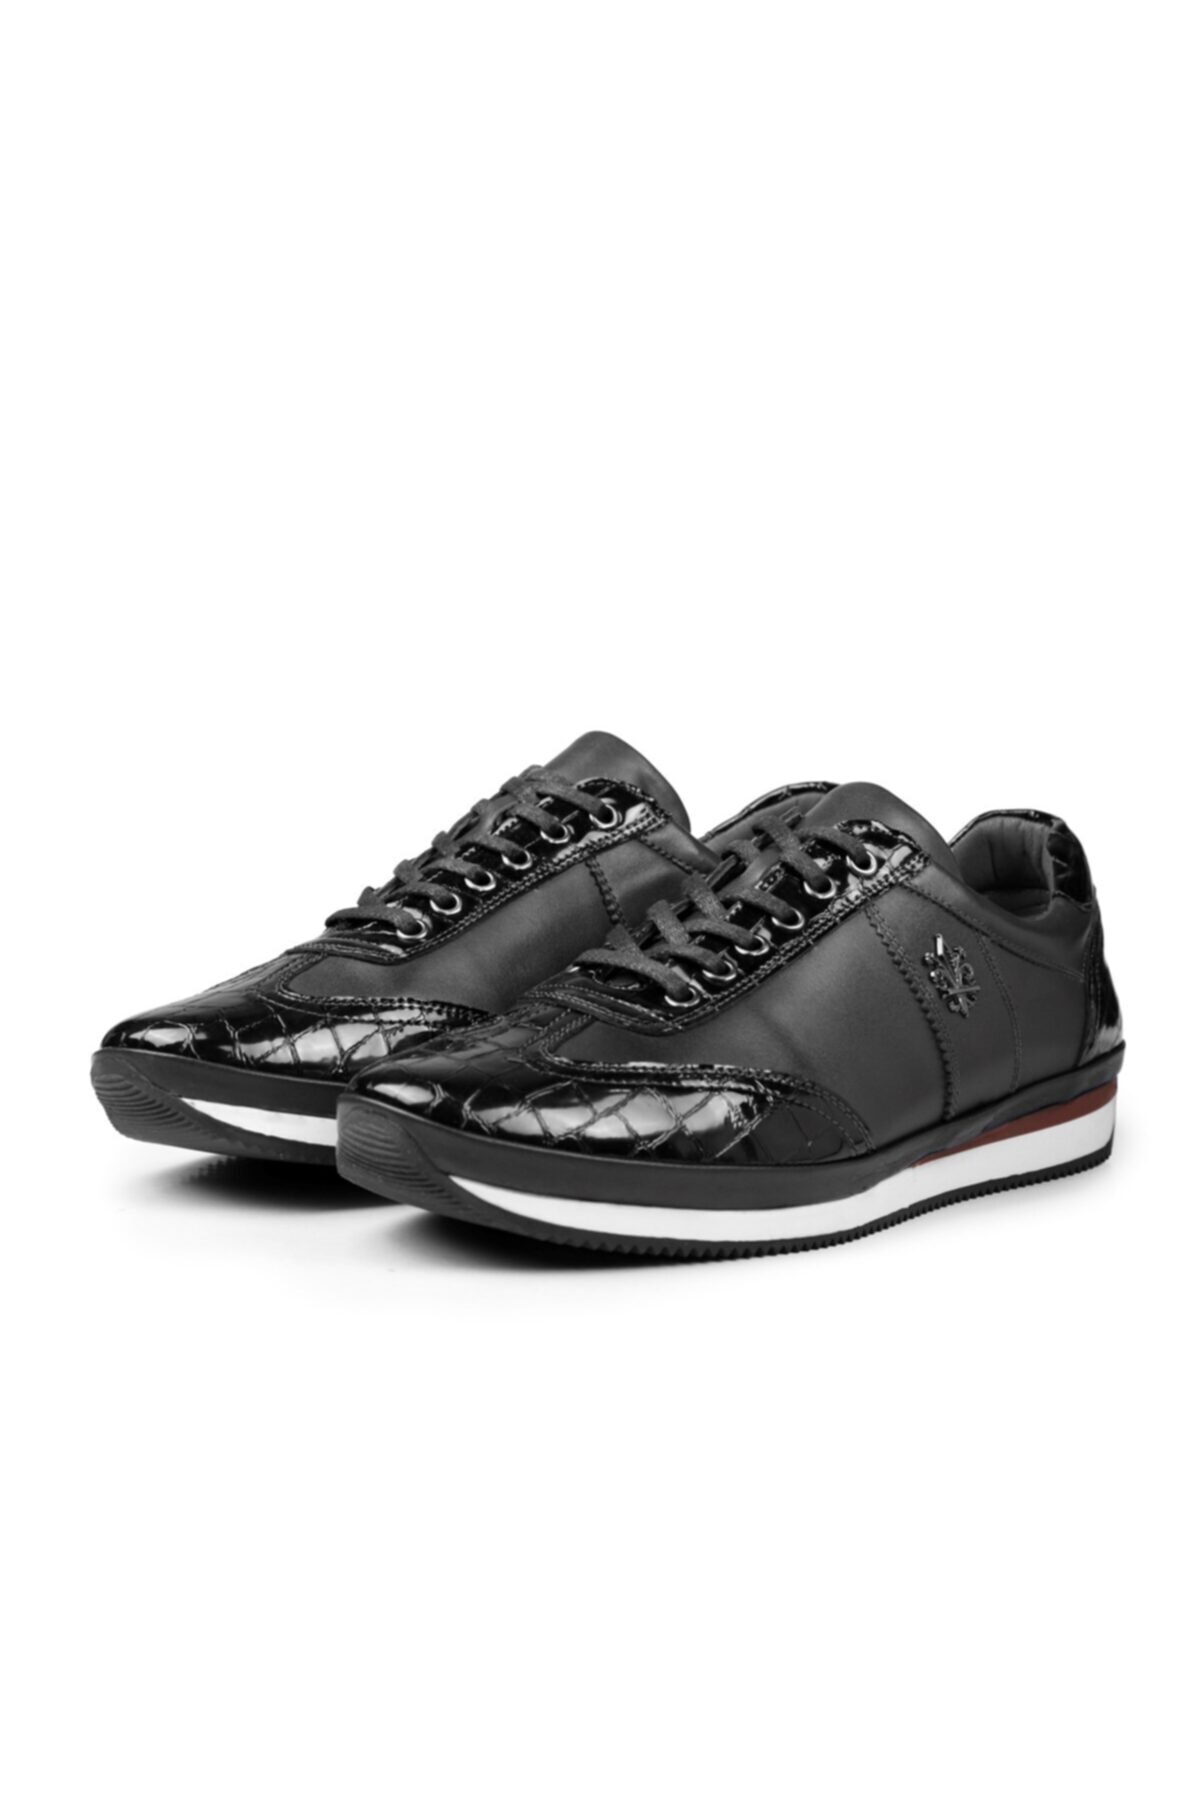 Ducavelli Marvelous Genuine Leather Men's Casual Shoes Black